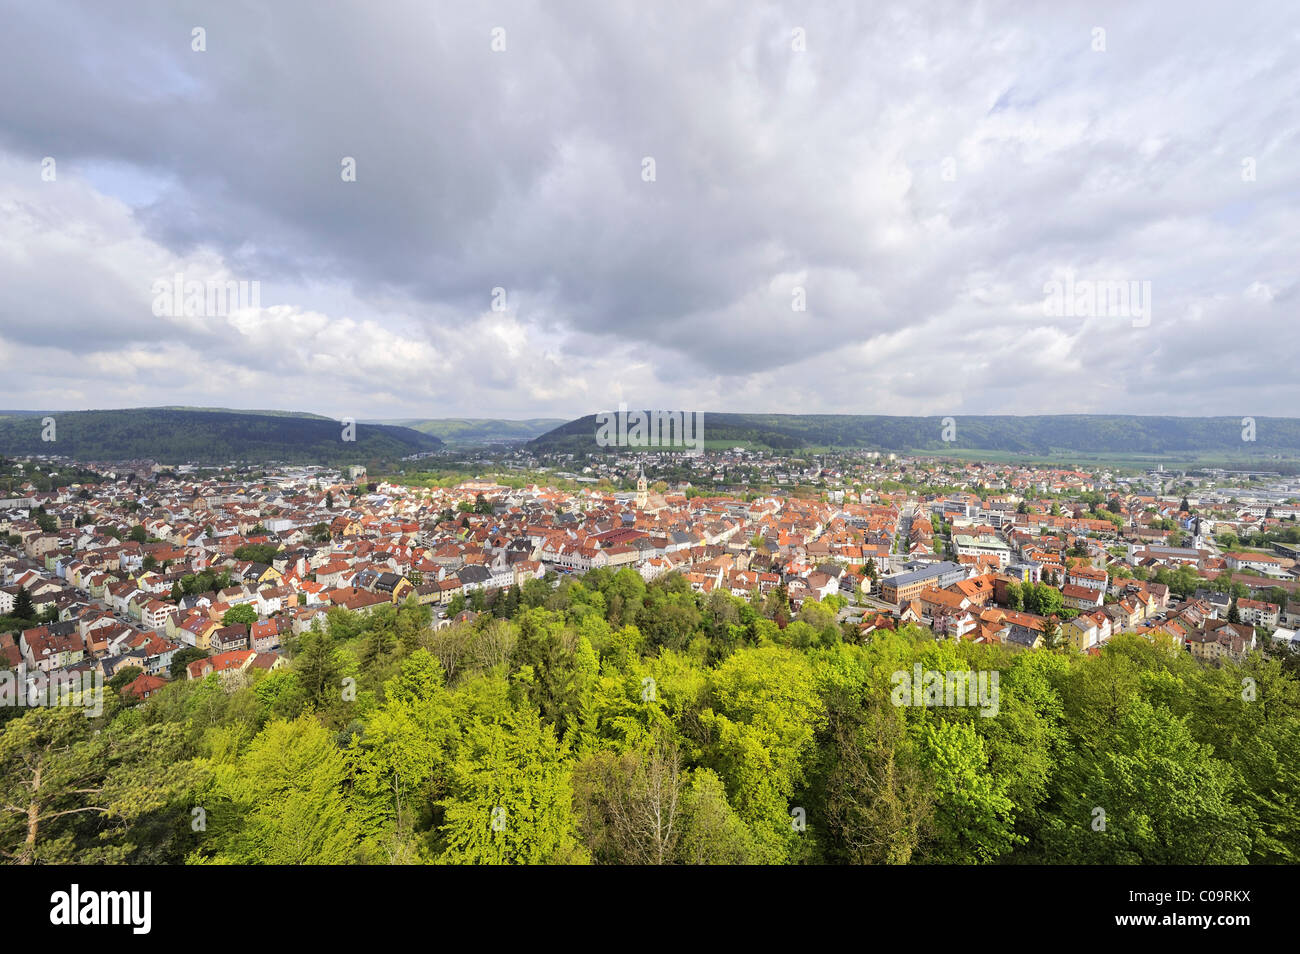 Blick auf die große Kreisstadt Tuttlingen, Landkreis Tuttlingen District,  Baden-Württemberg, Deutschland, Europa Stockfotografie - Alamy